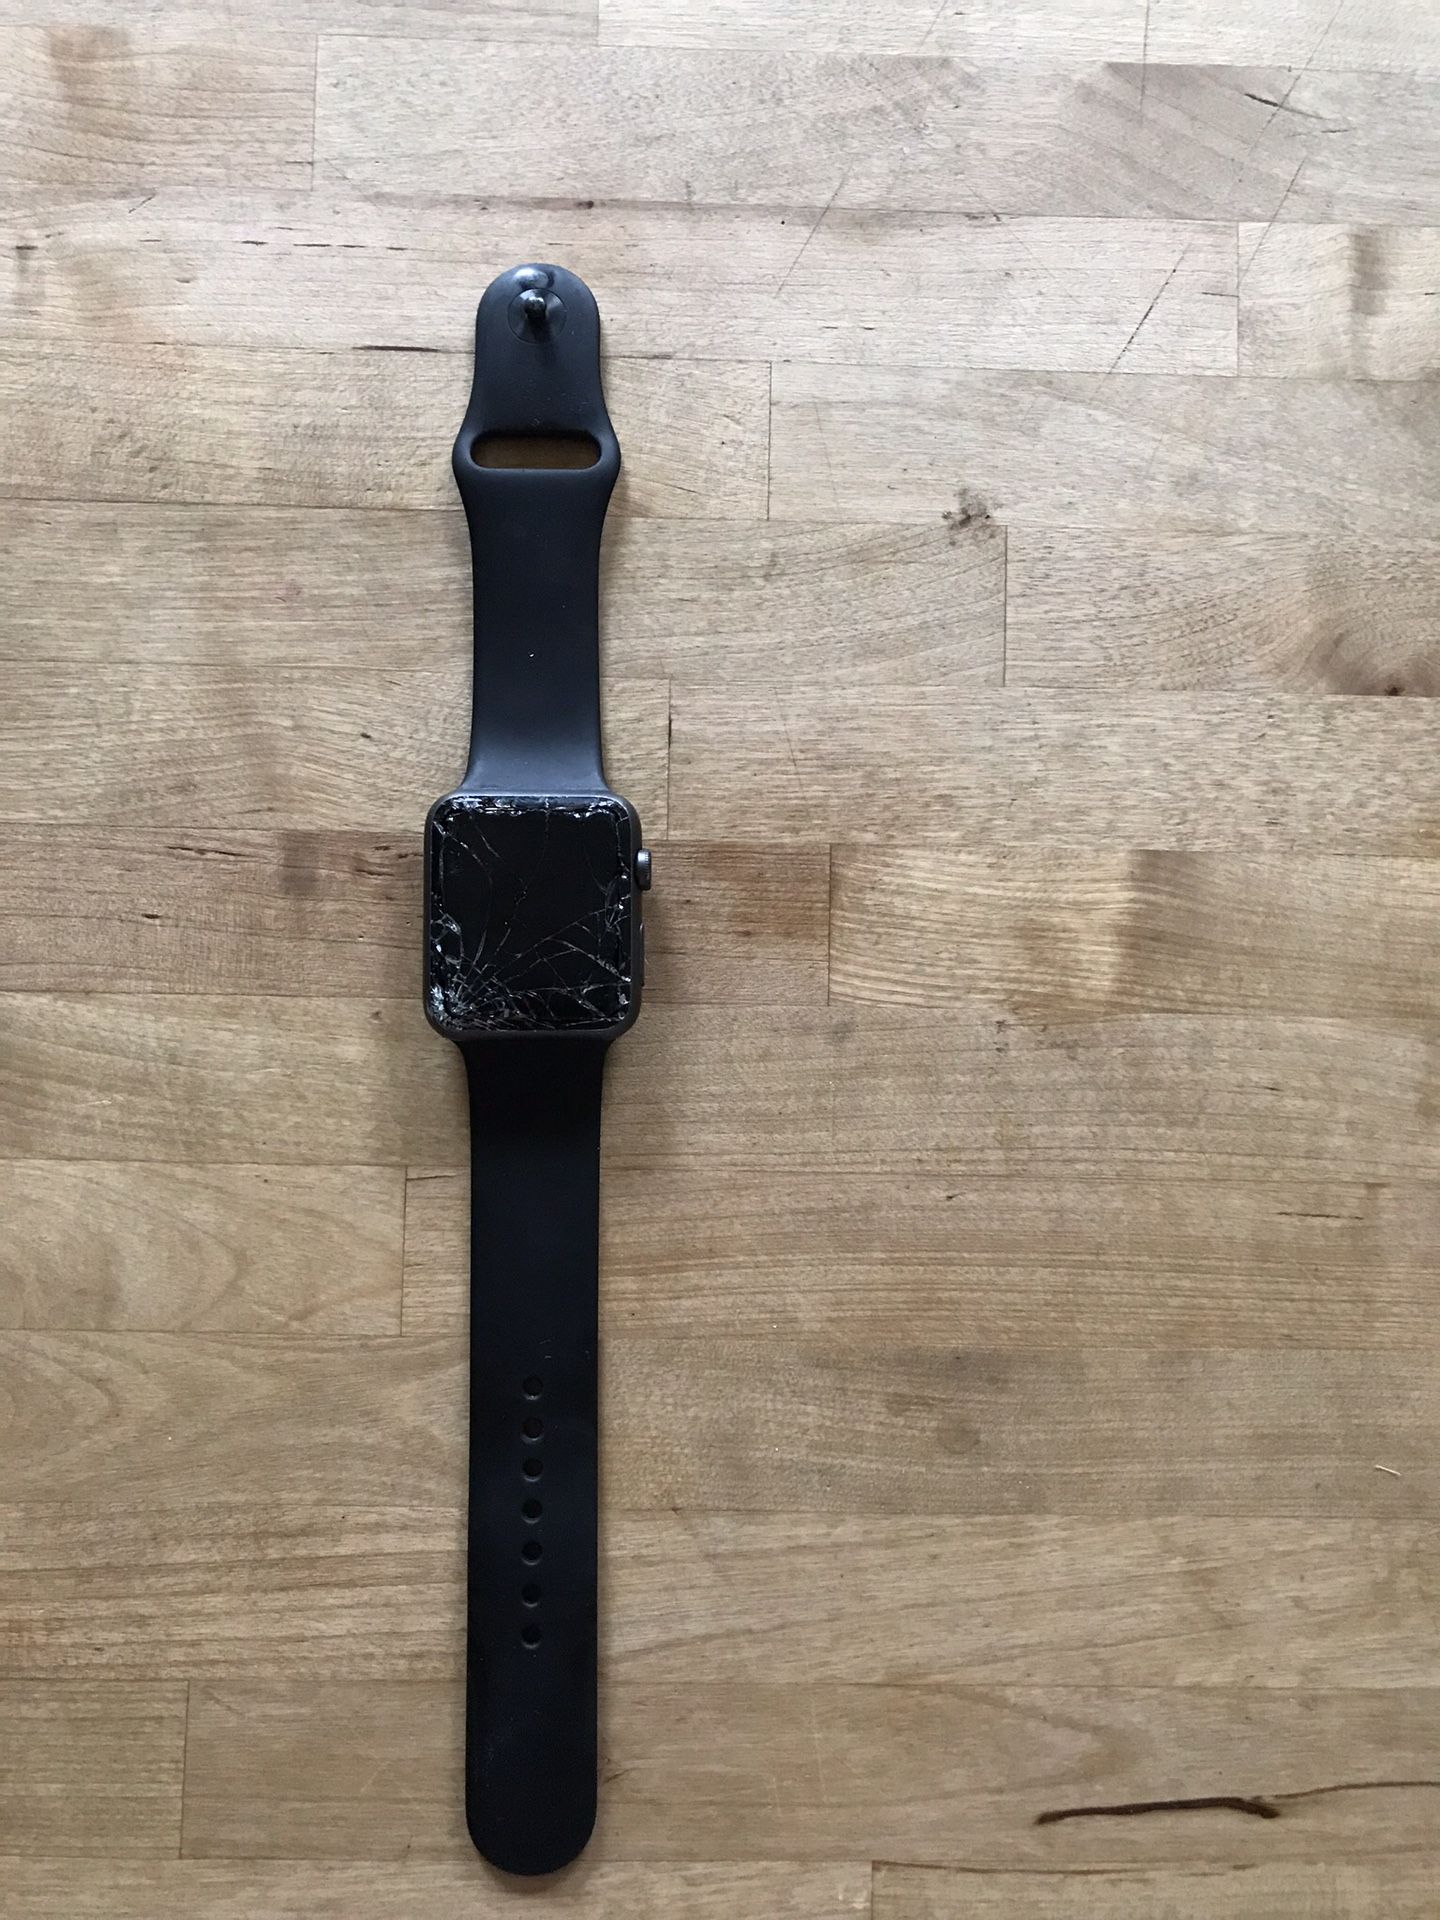 Apple Watch - Gen 1 - cracked